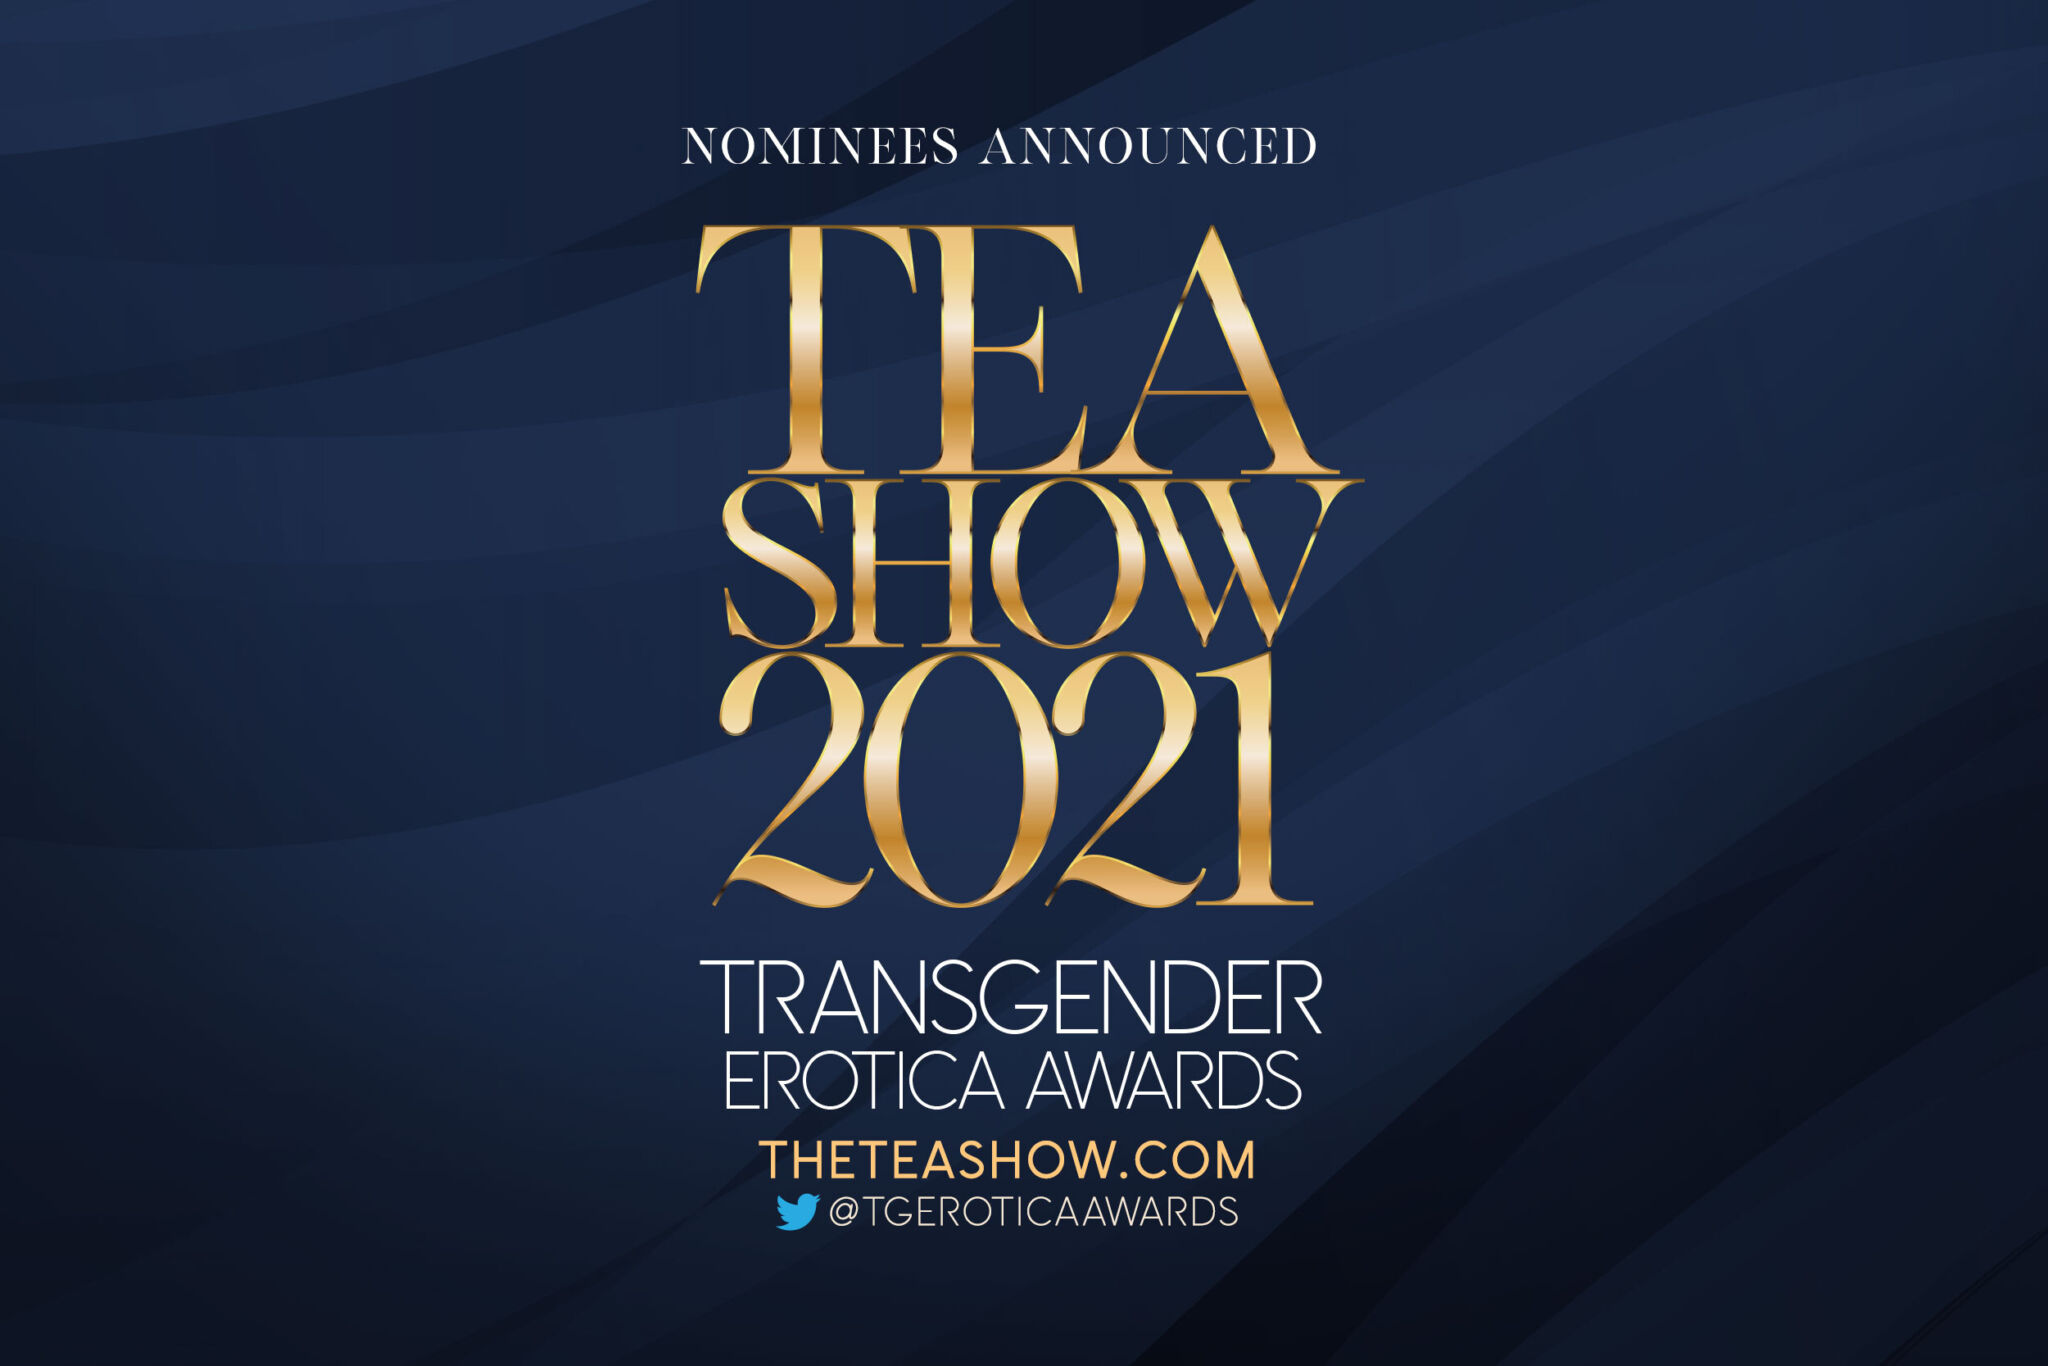 2021 TEA Nominees Announced The Trans Erotica Awards